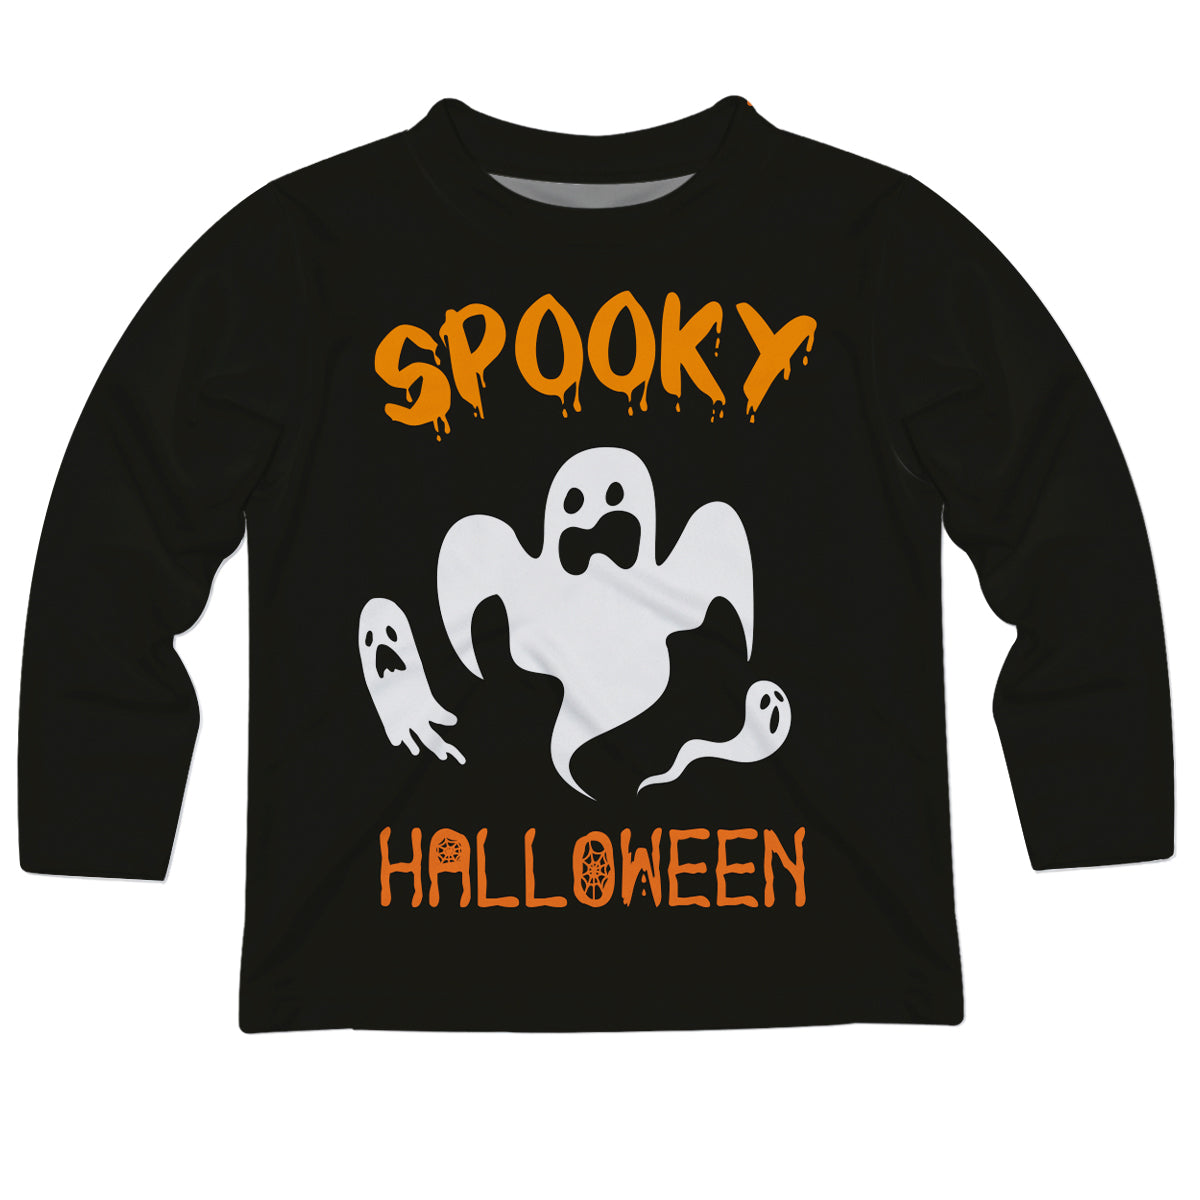 Spooky Halloween Black Long Sleeve Tee Shirt